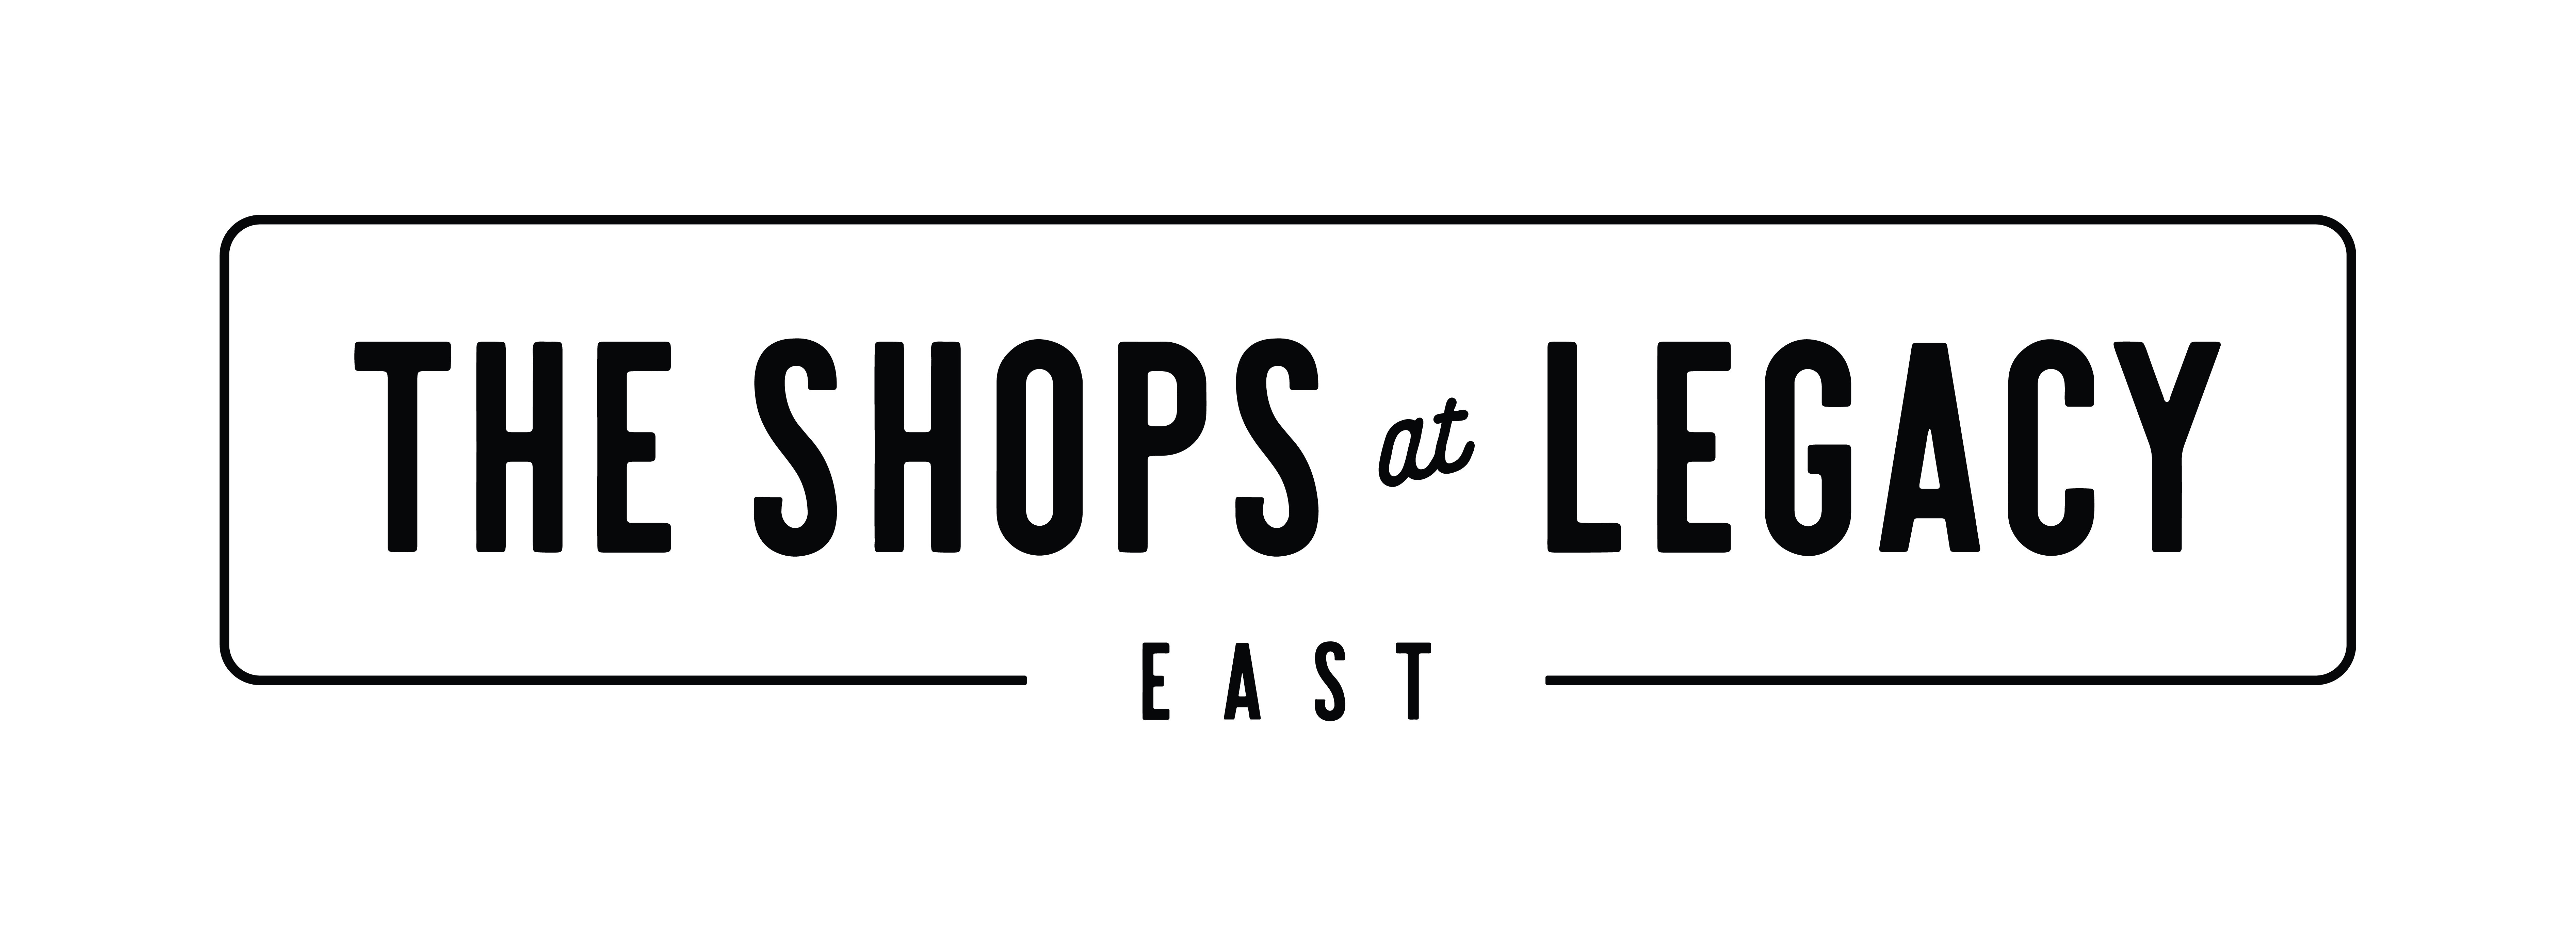 Legacy East logo